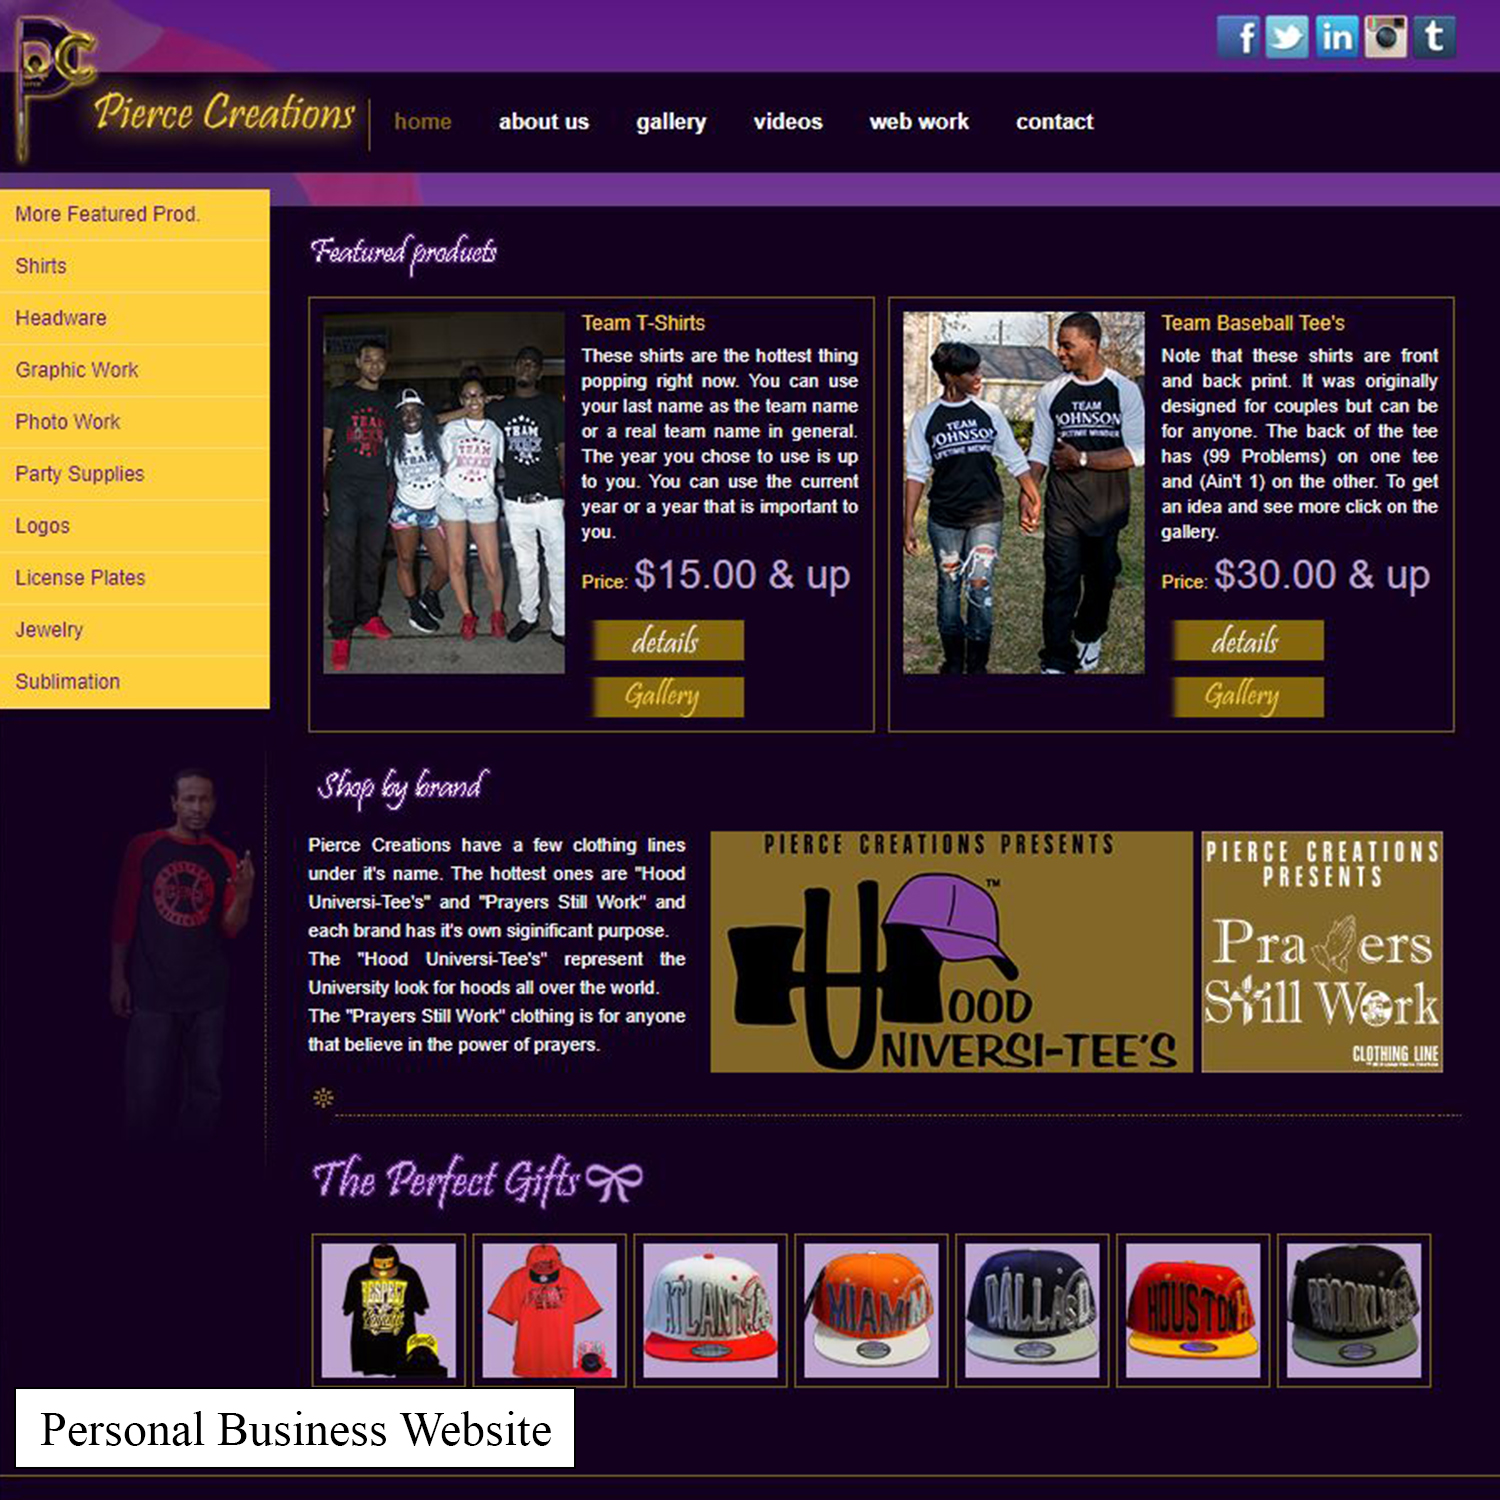 Image Screenshot of my 2nd Business Website